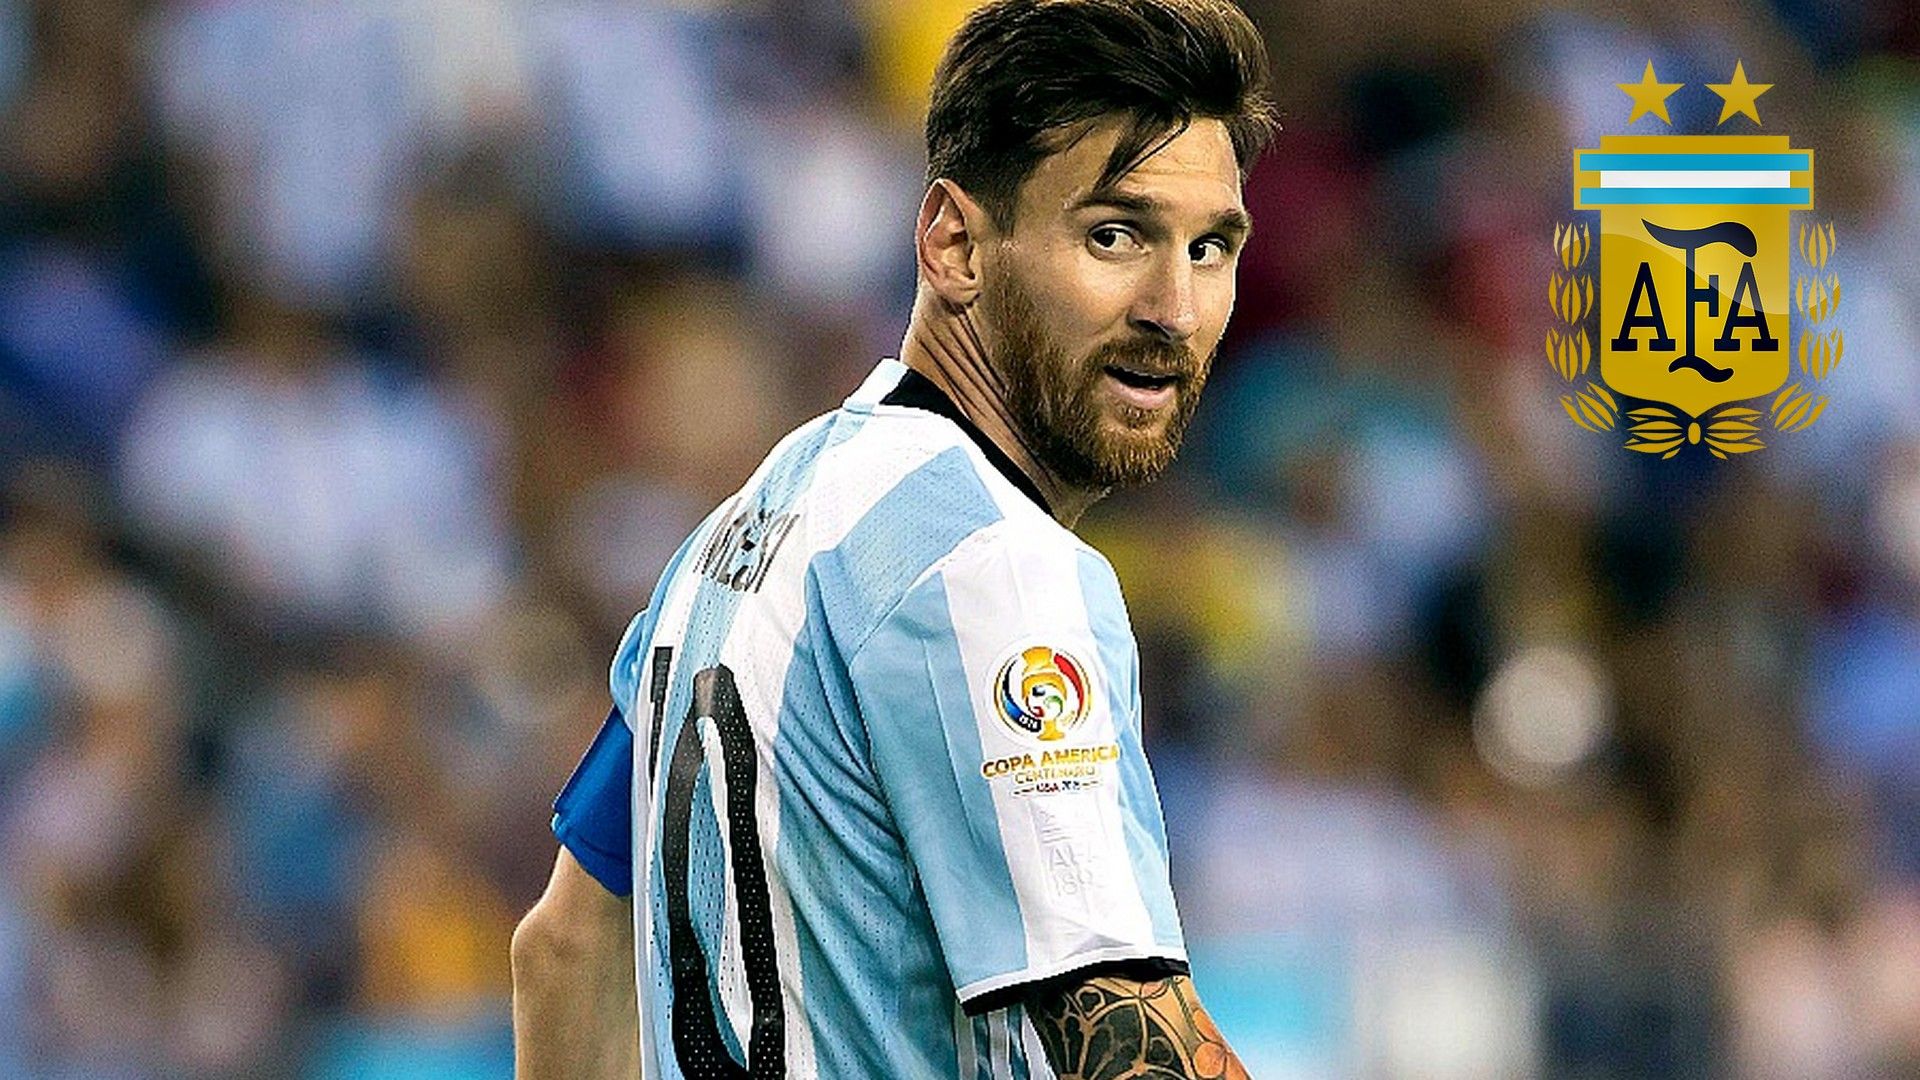 Messi Argentina Wallpaper For Desktop .wallpapertip.com